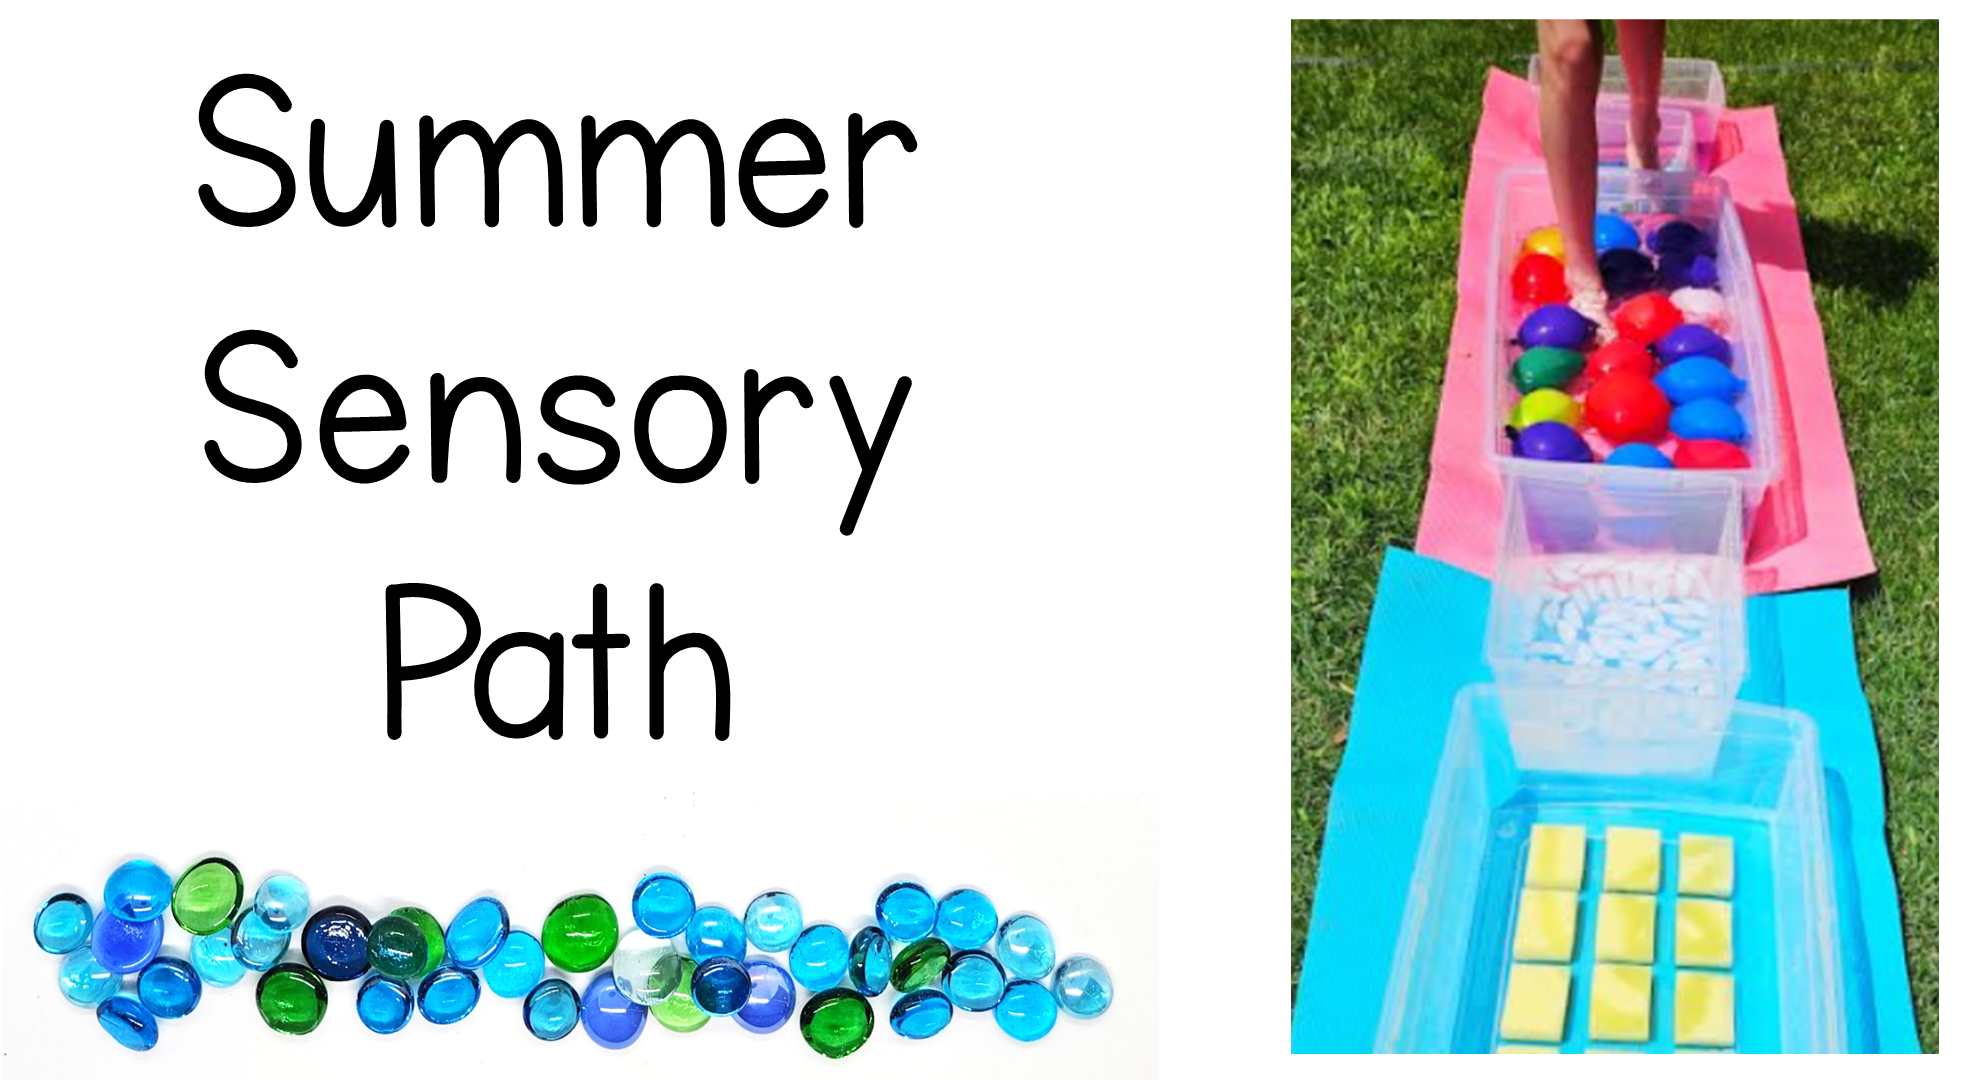 Summer Sensory Path for Kids